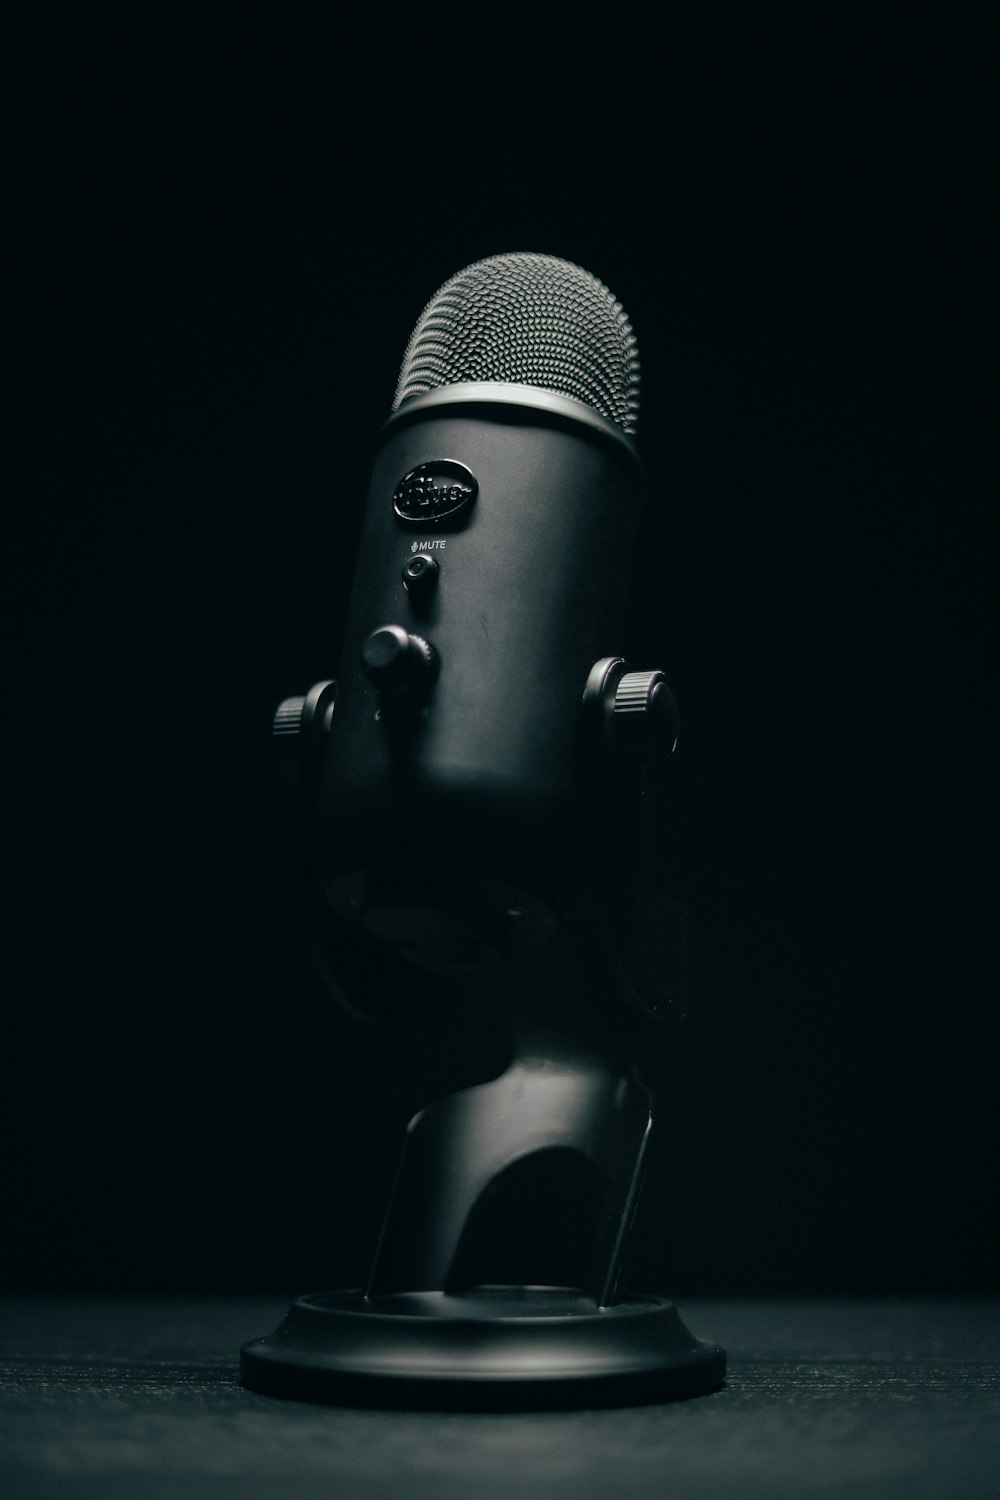 microfone preto com suporte no fundo preto